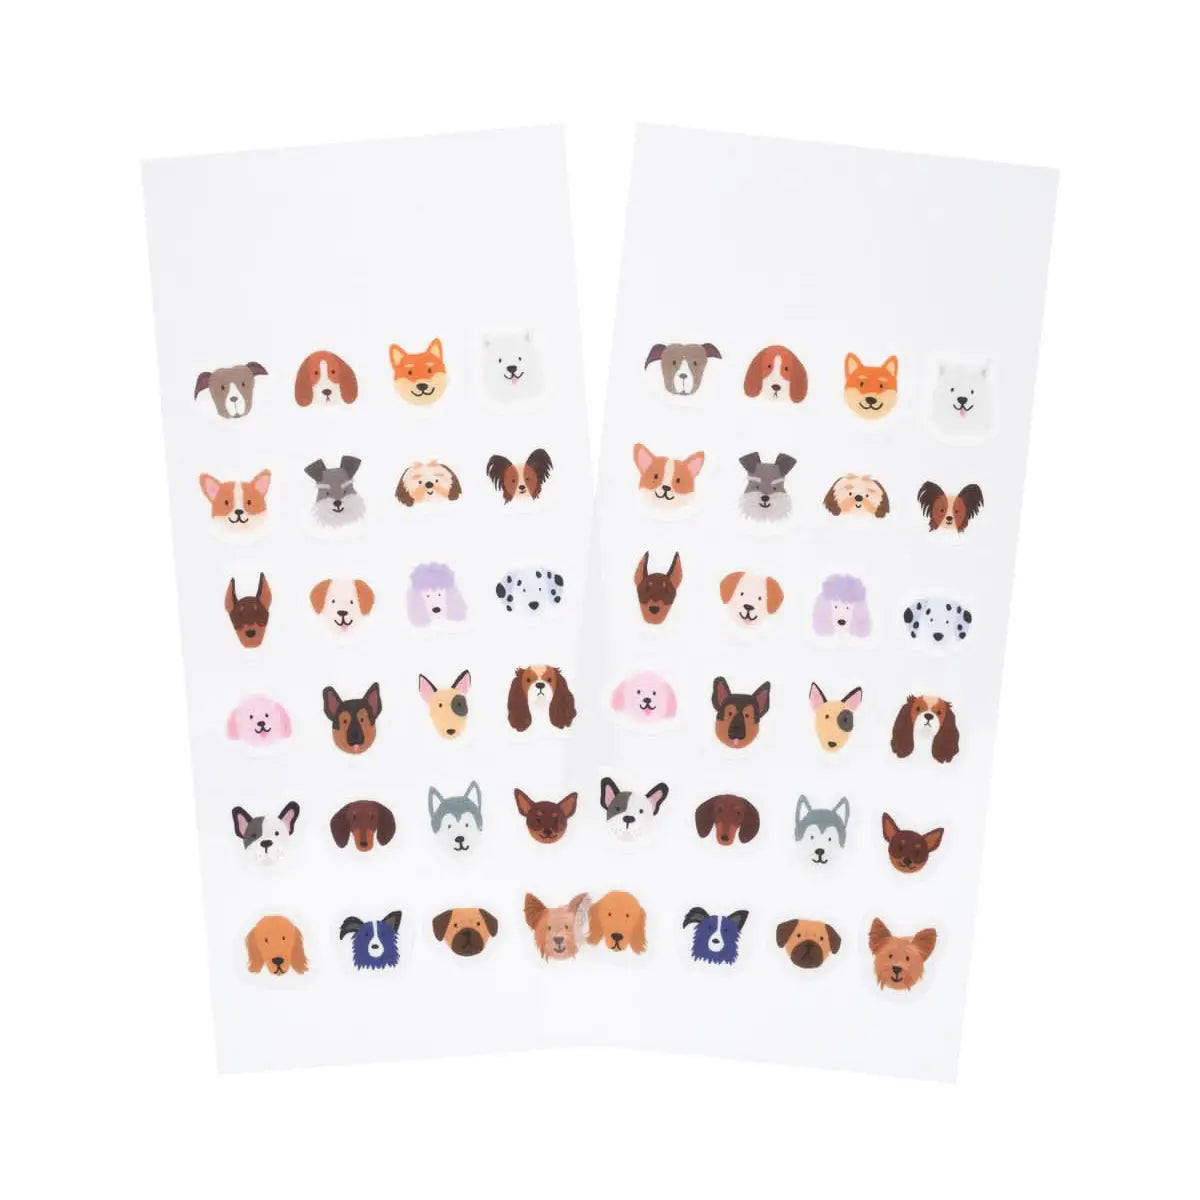 Washi Stickers - Dogs